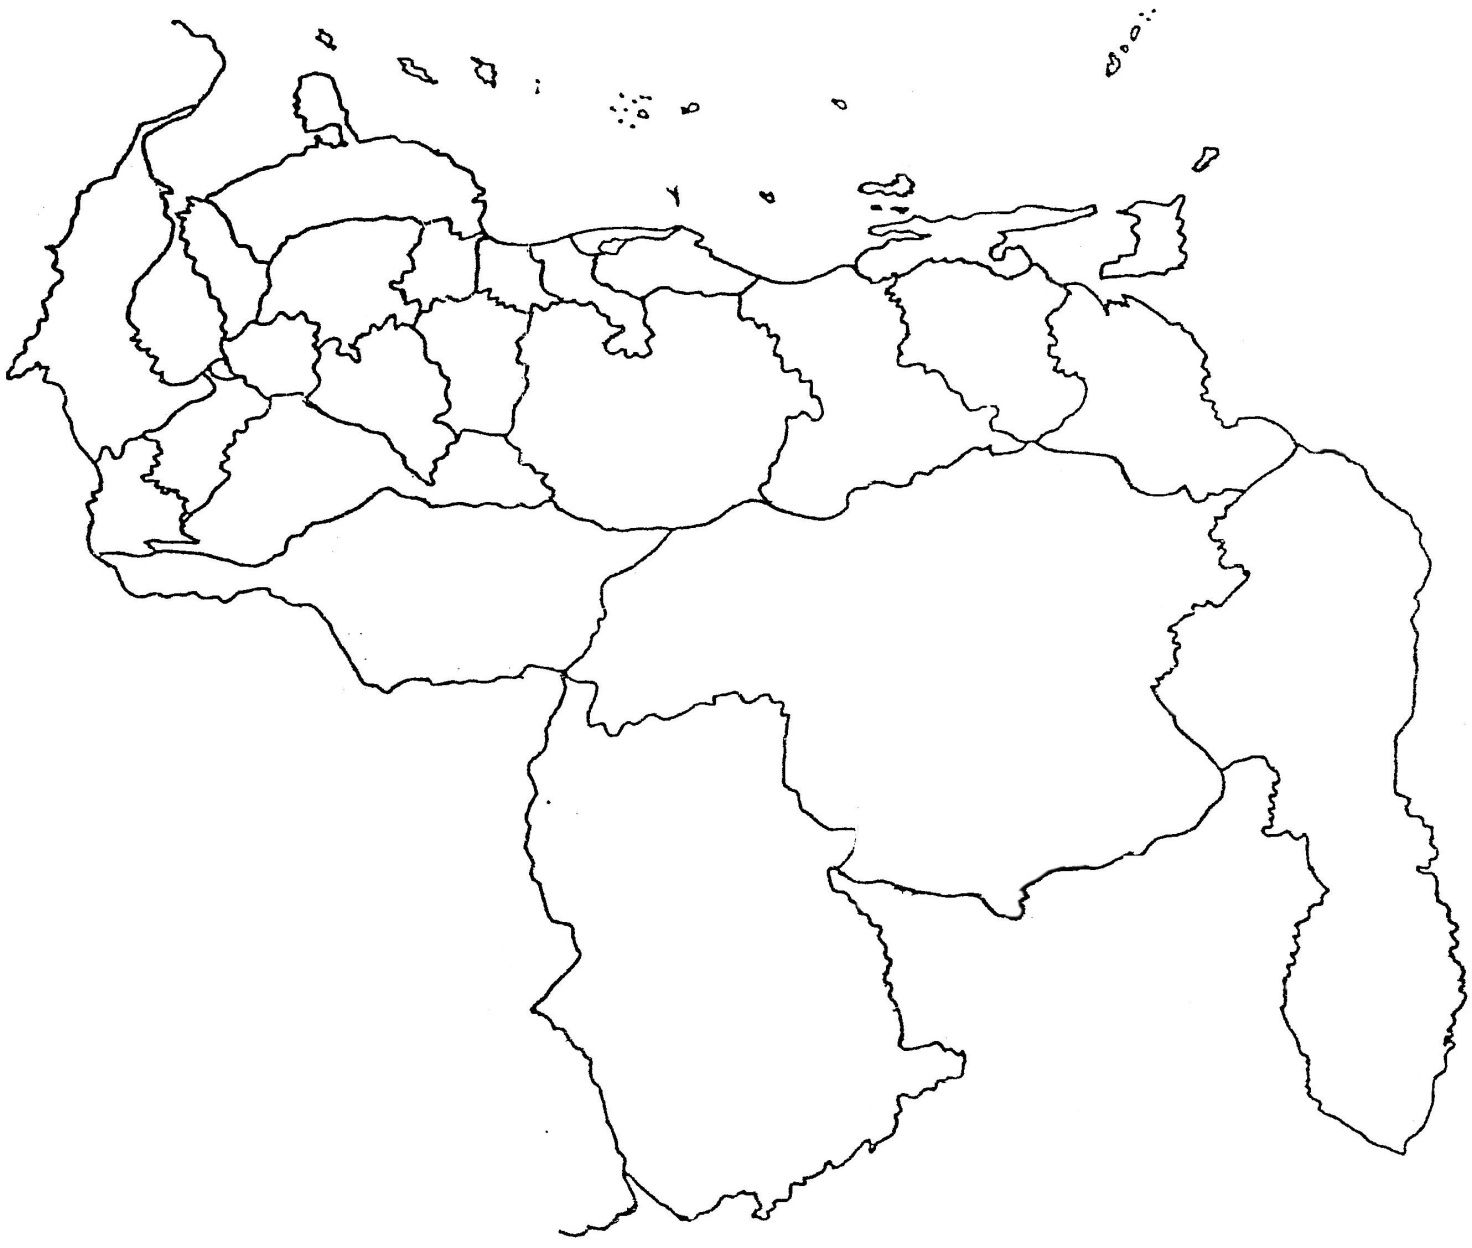 Mapa De Venezuela Vector At Collection Of Mapa De Venezuela Vector Free For 0960